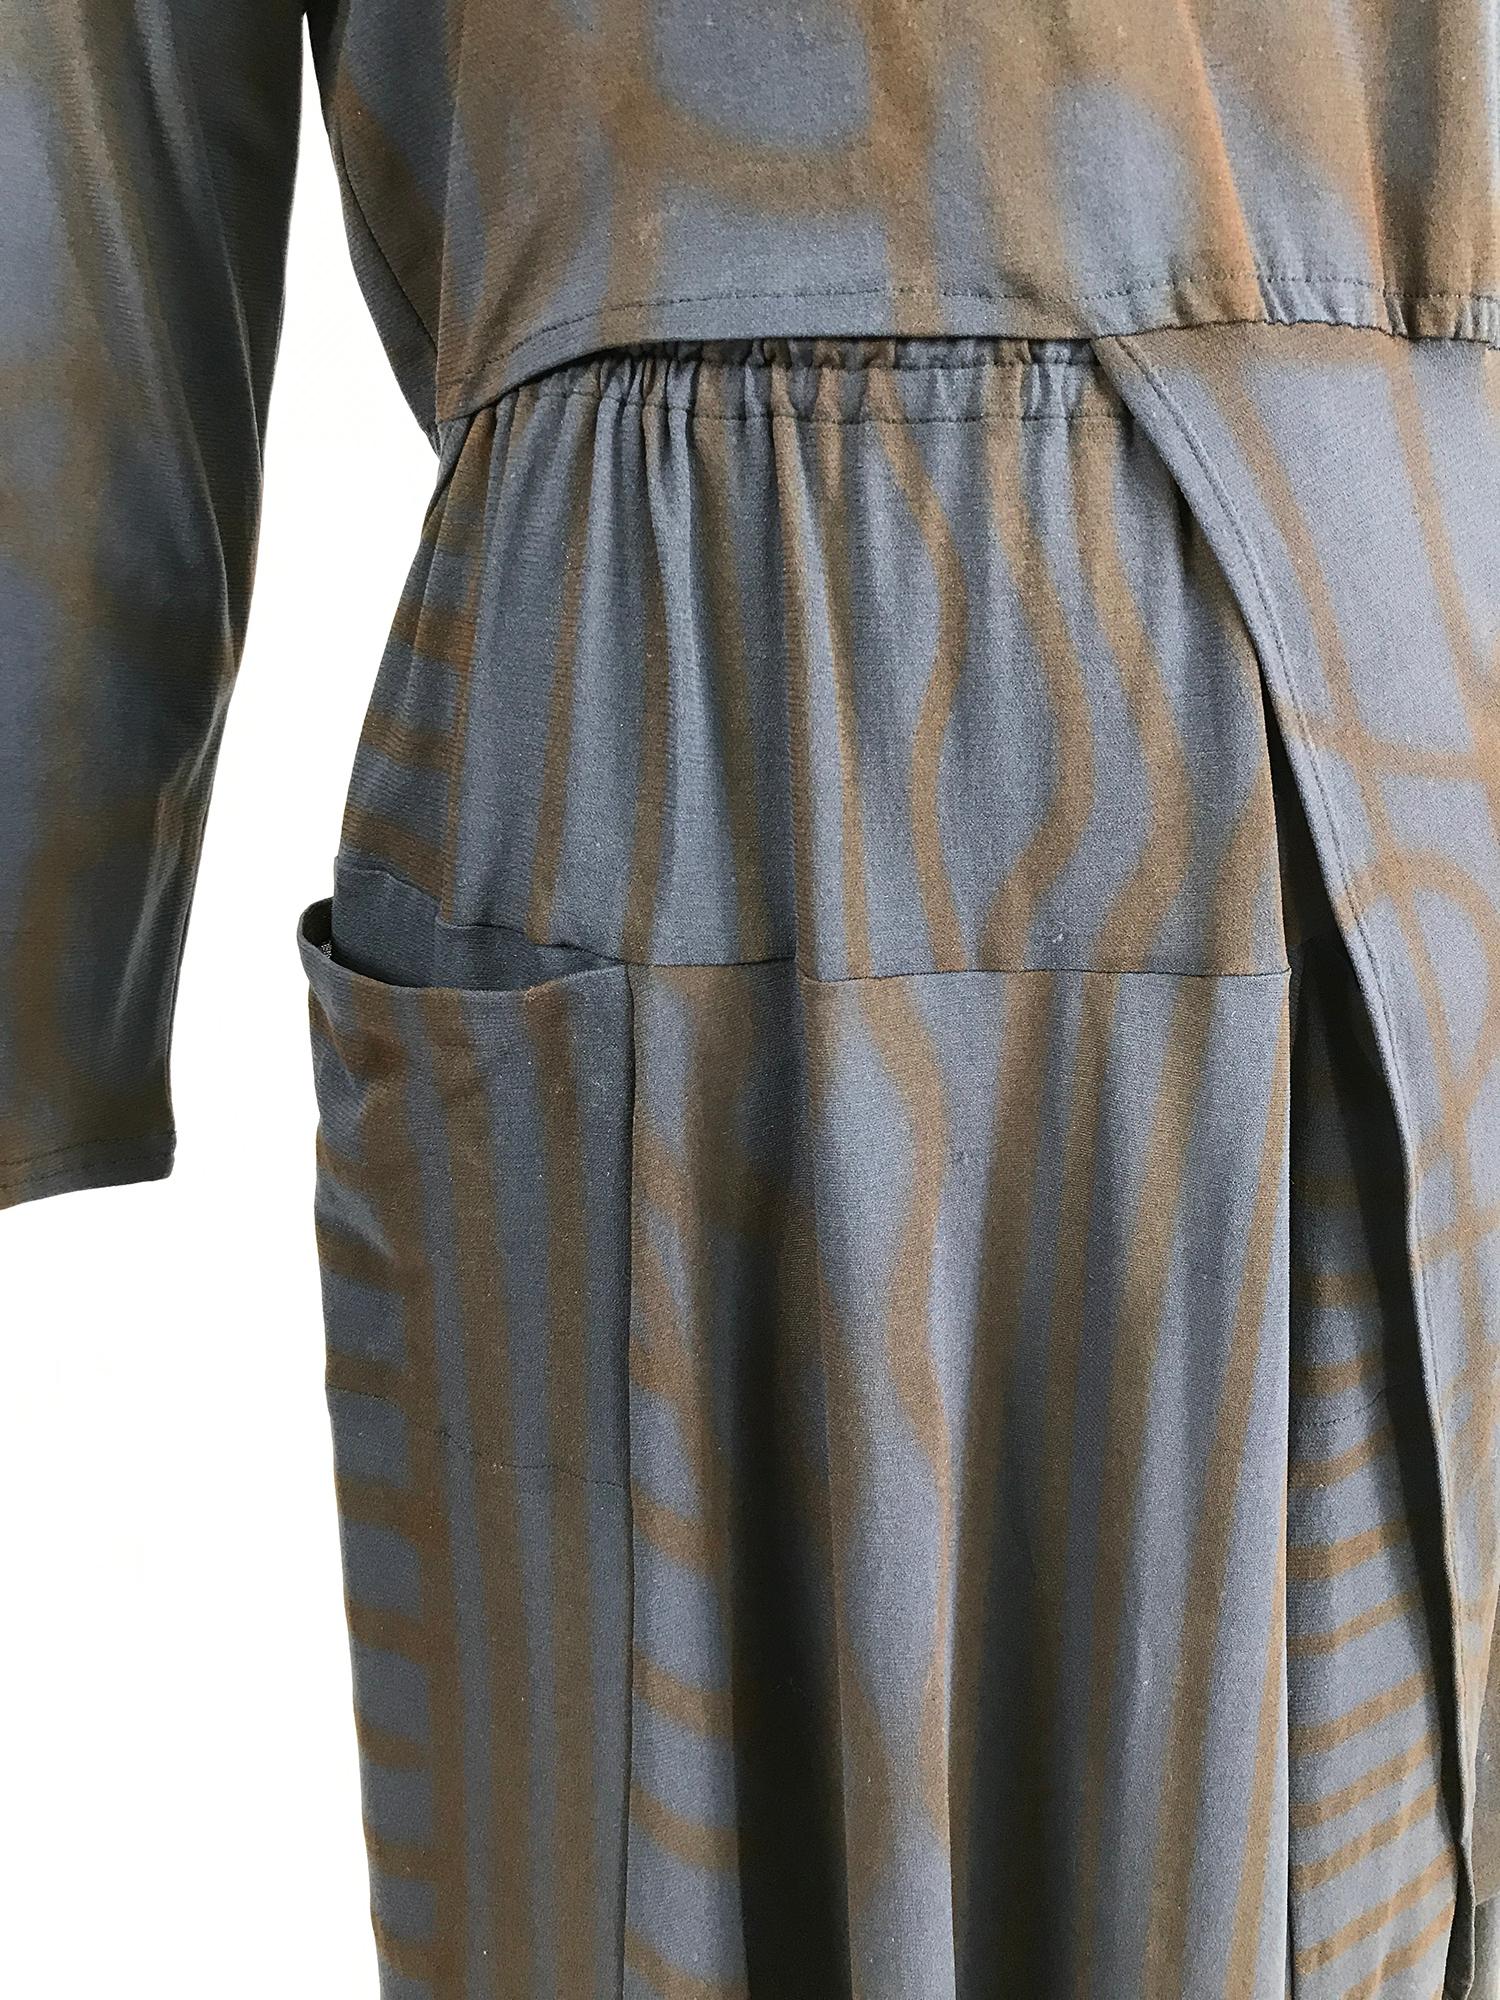 Yohji Yamamoto Blue and Grey Asymmetrical Top and Pocket Skirt For Sale ...